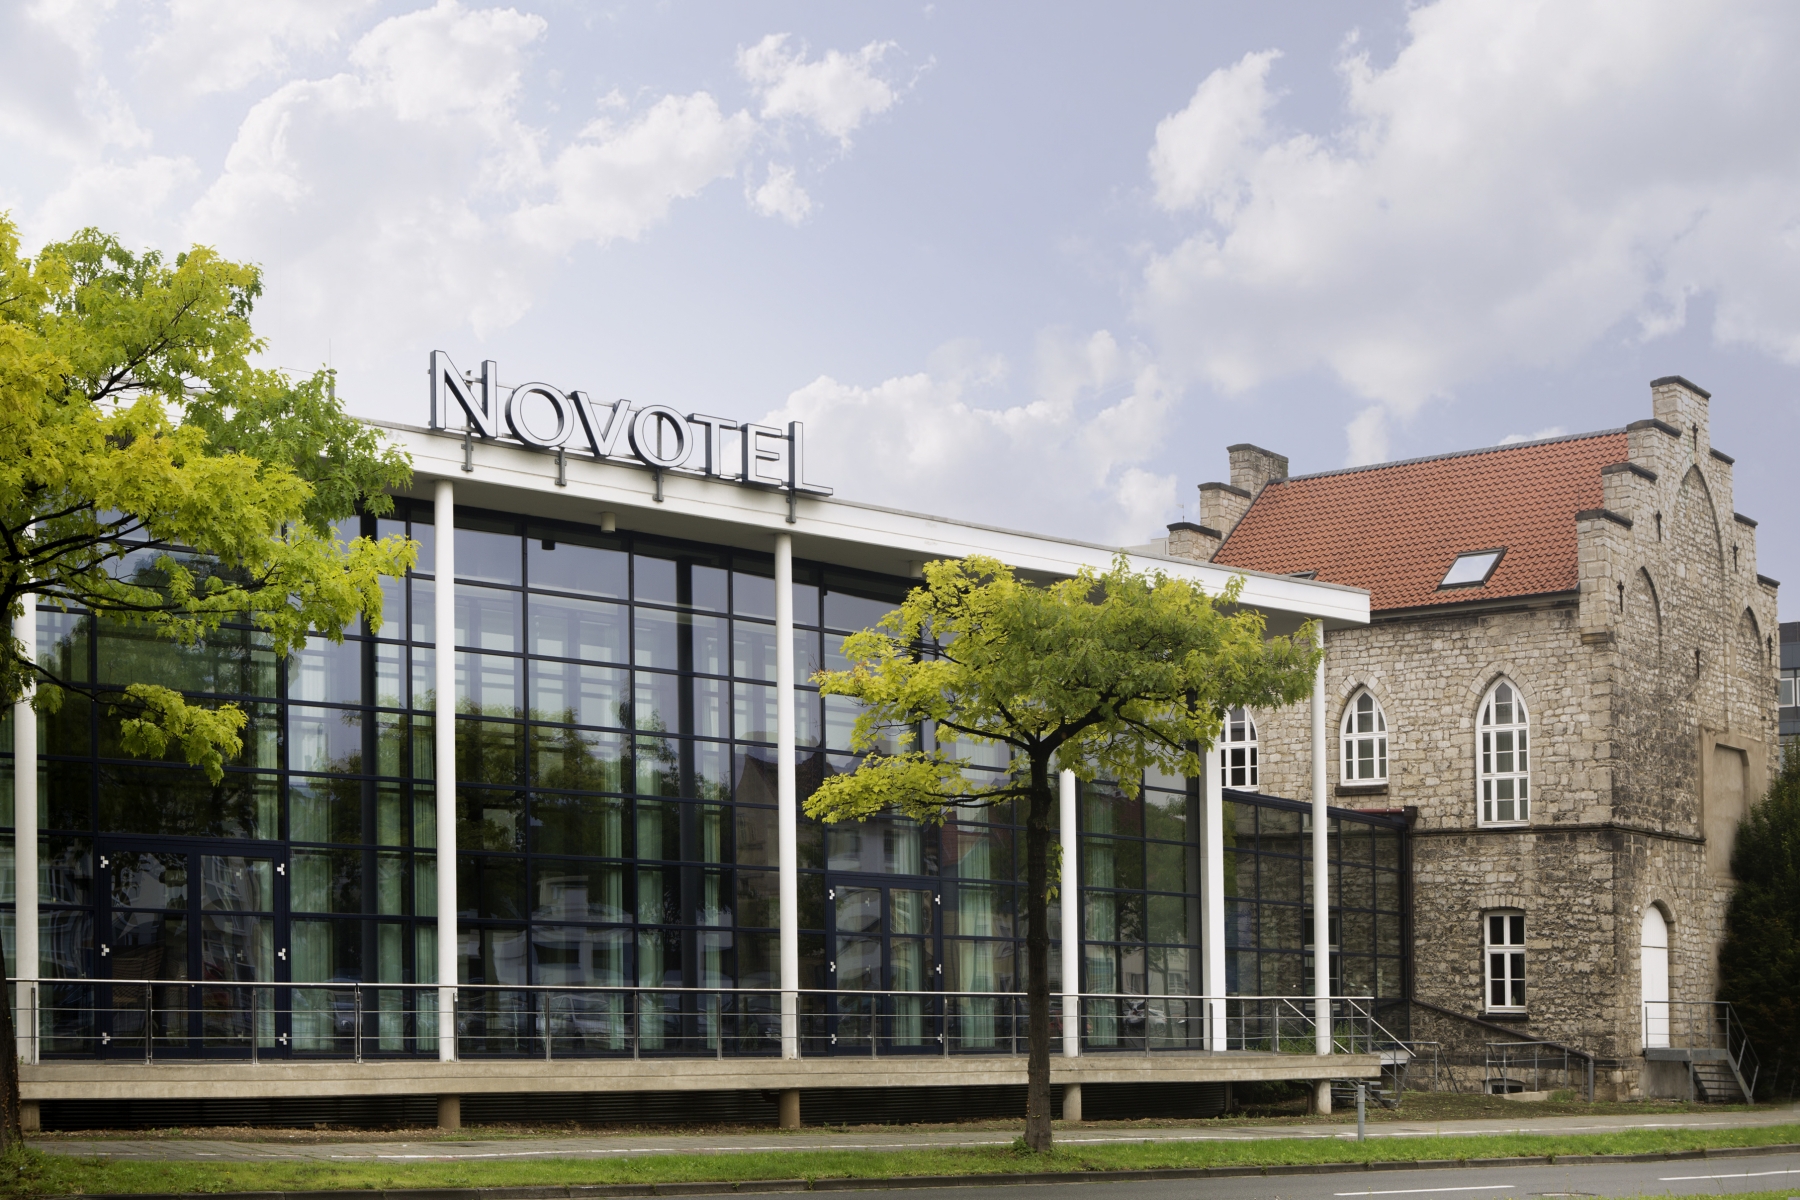 Novotel Hildesheim